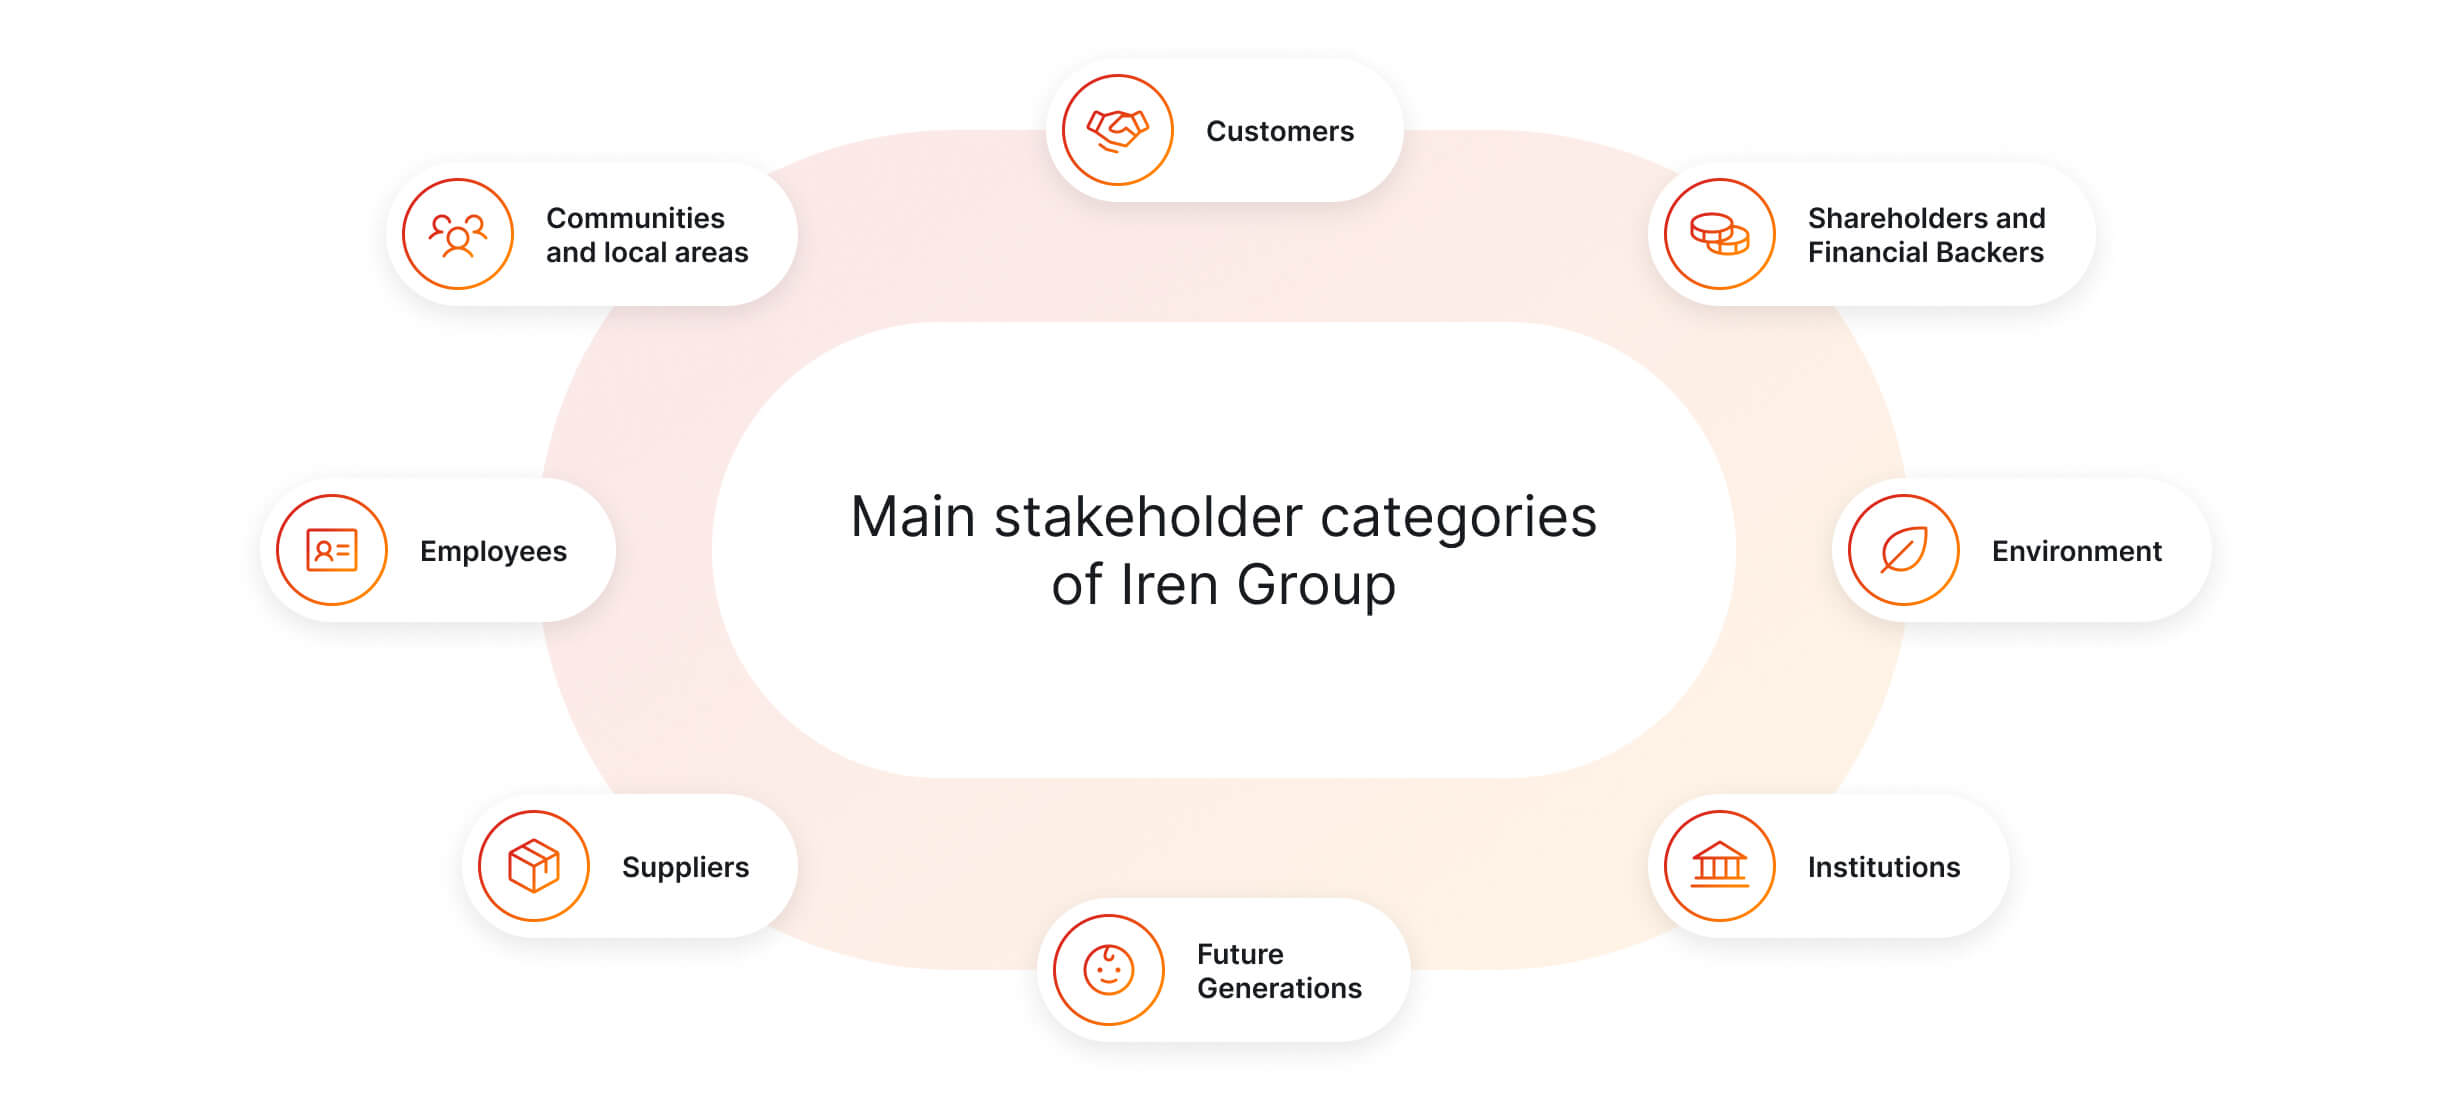 Main stakeholder categories